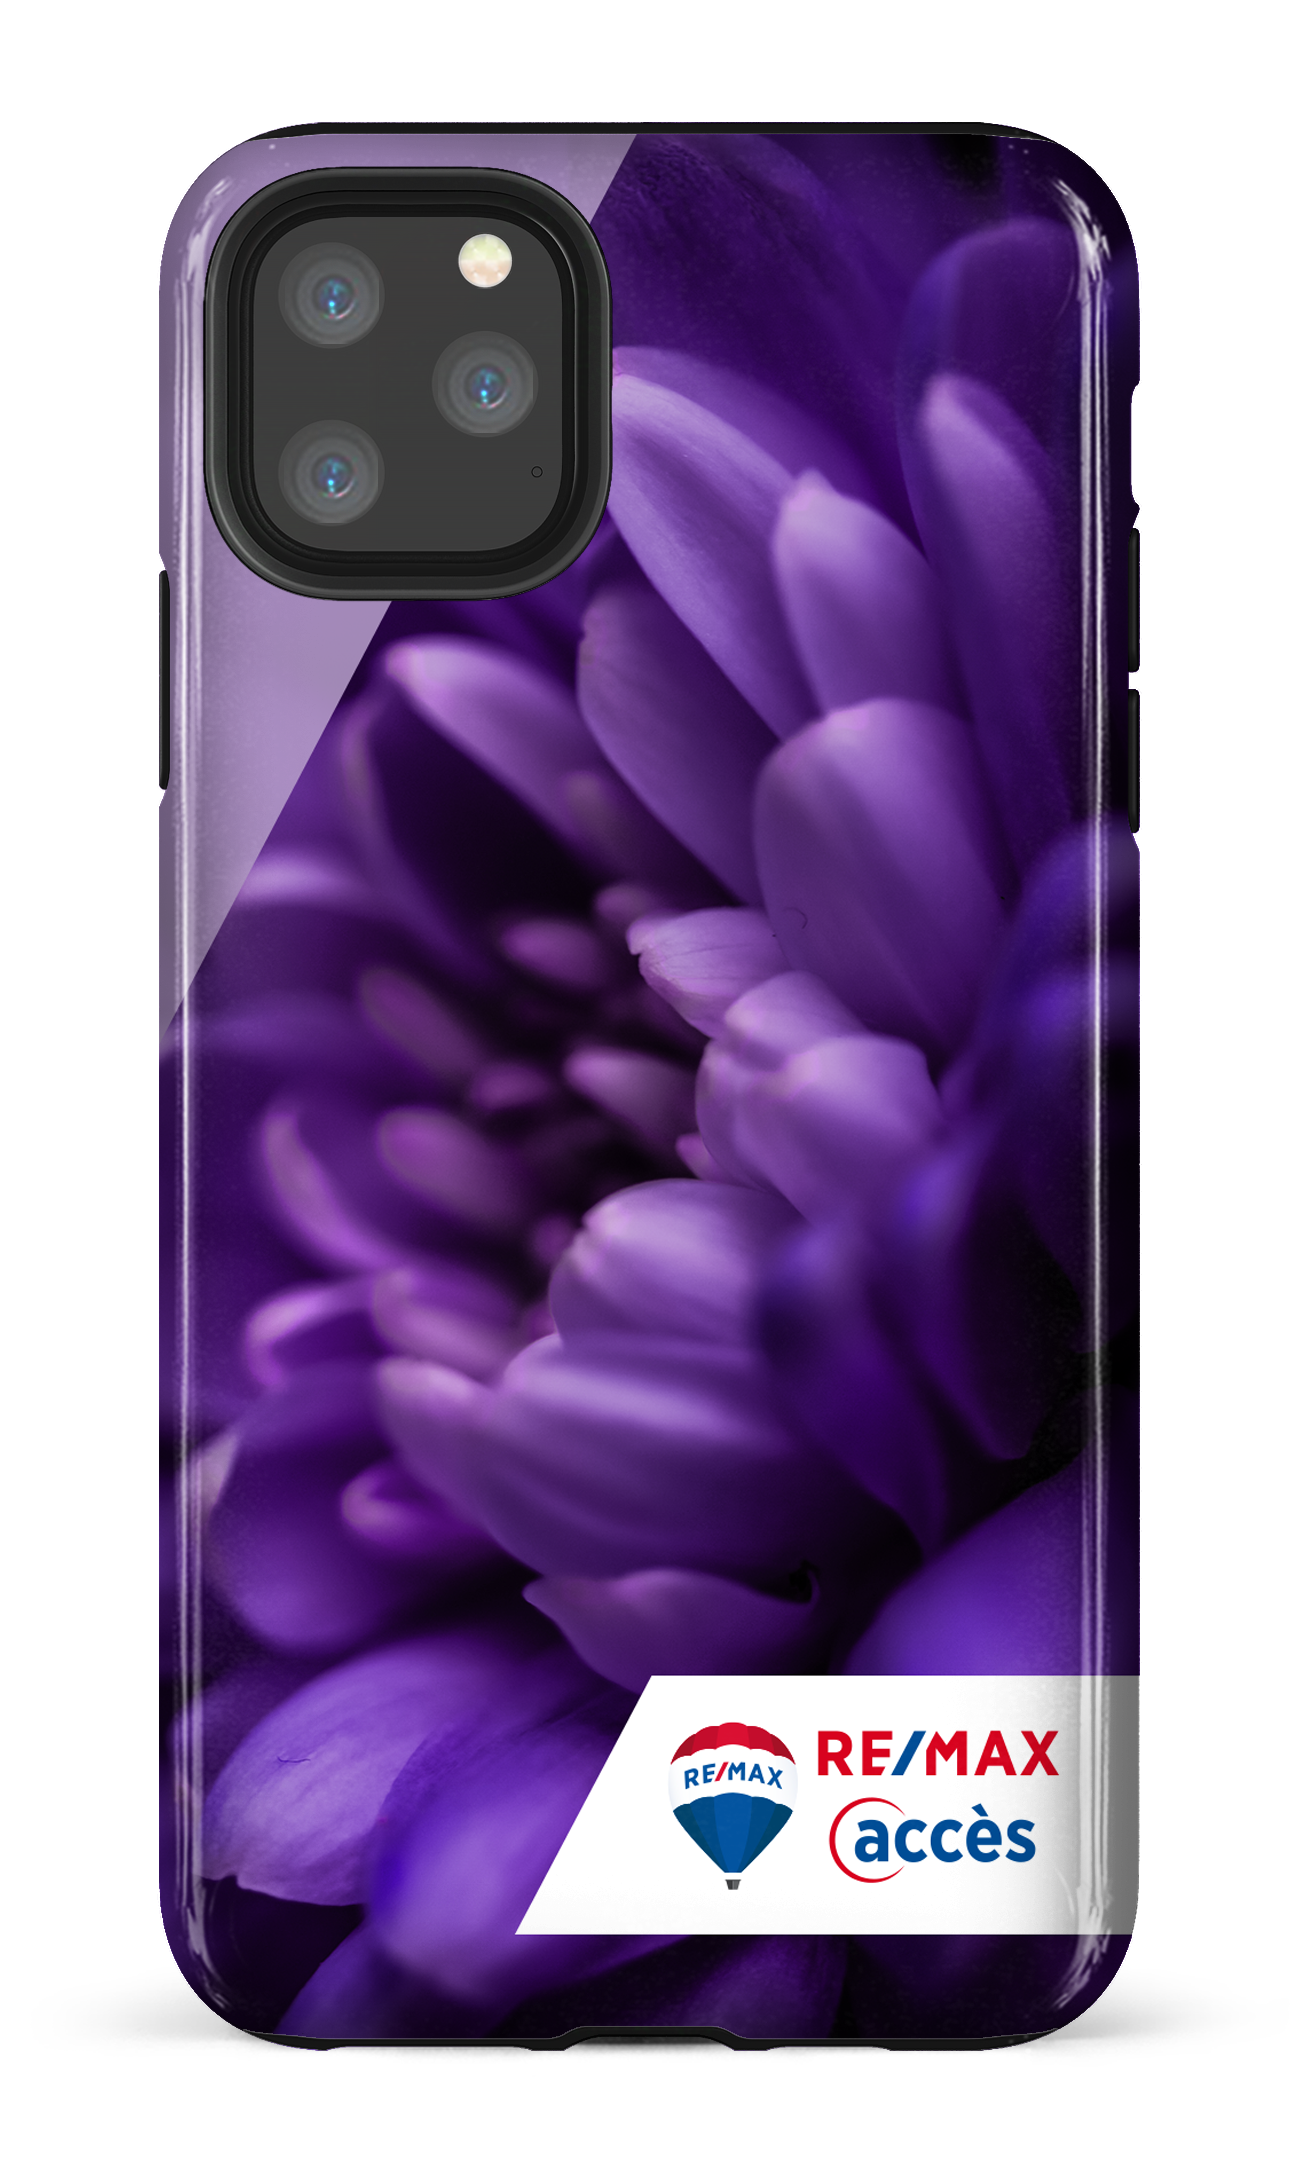 Fleur gros plan - iPhone 11 Pro Max